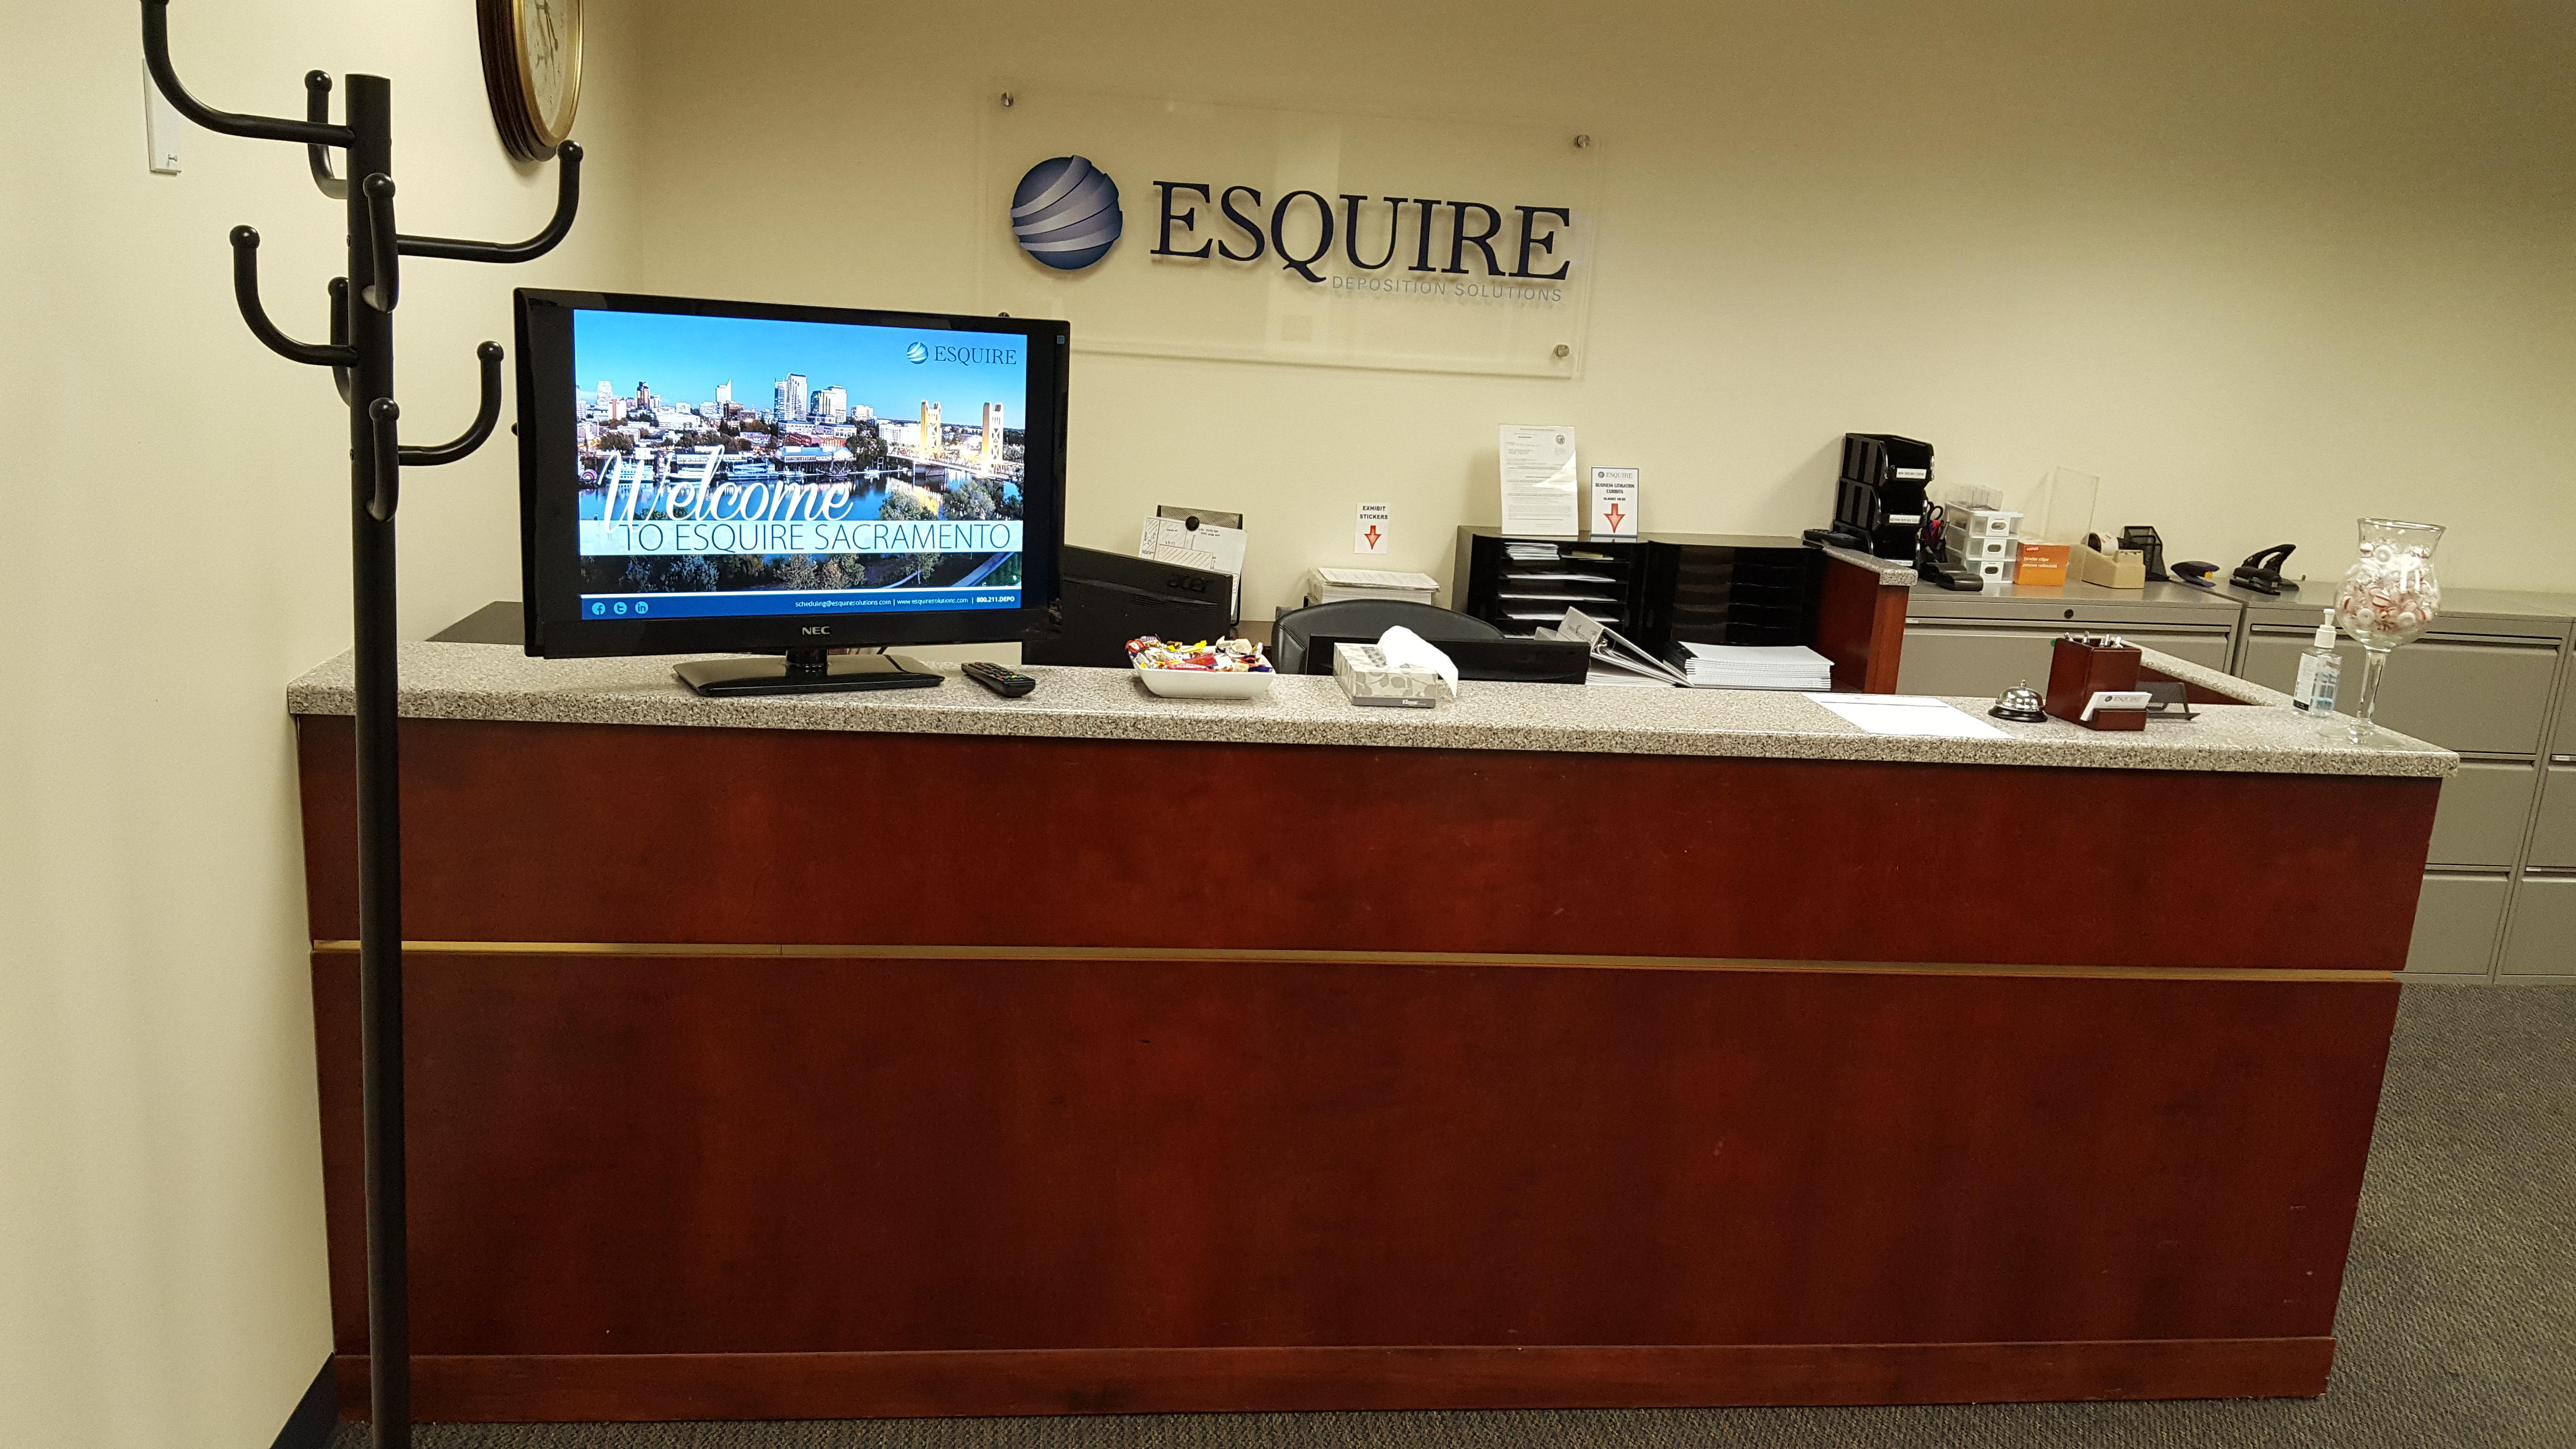 Esquire Sacramento, CA reception area